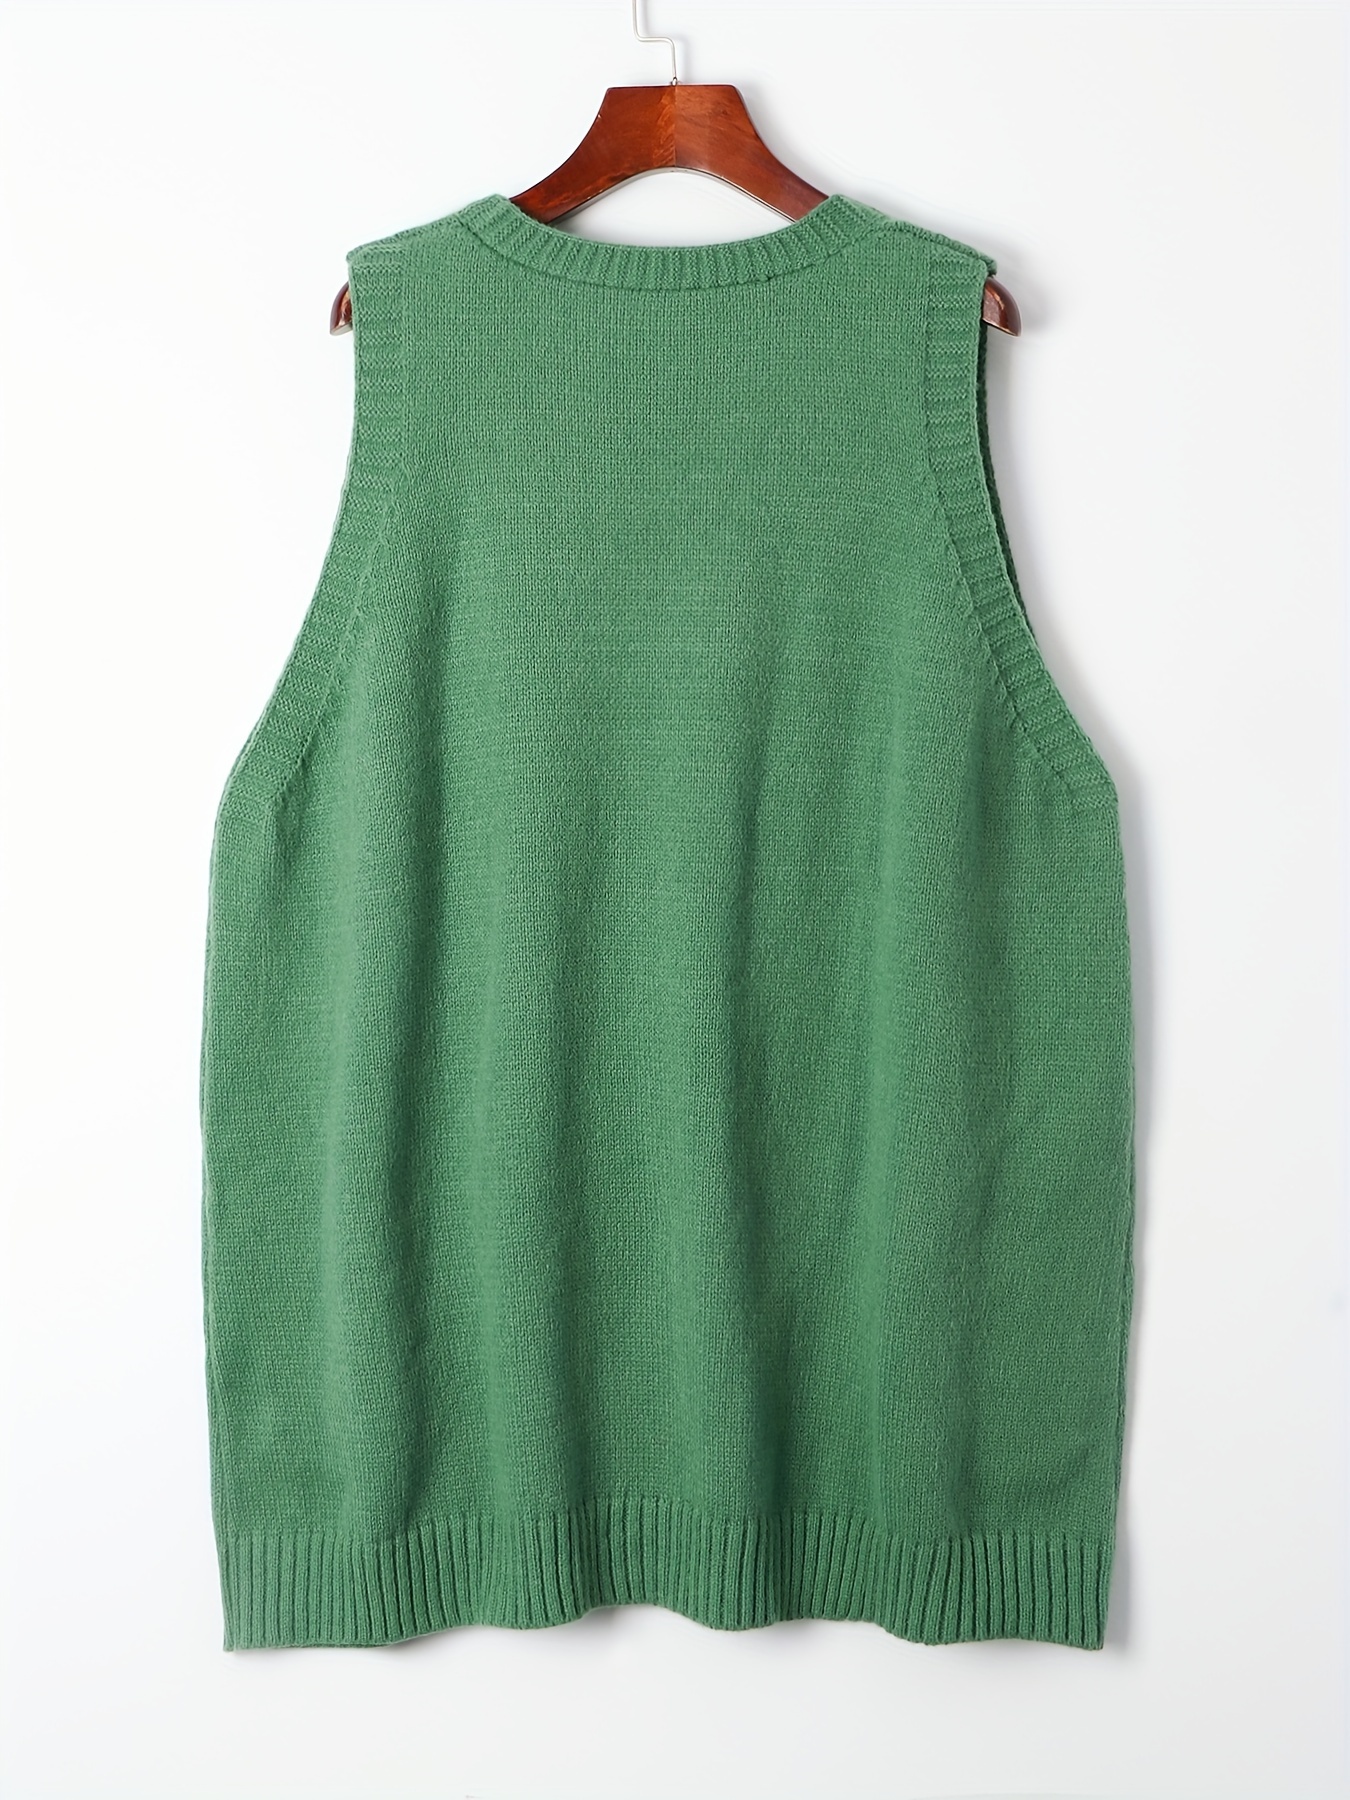 Kewlioo Sweat Vestwomen's Dark Green Sleeveless Knitted Sweater Vest -  Autumn Criss-cross Pullover